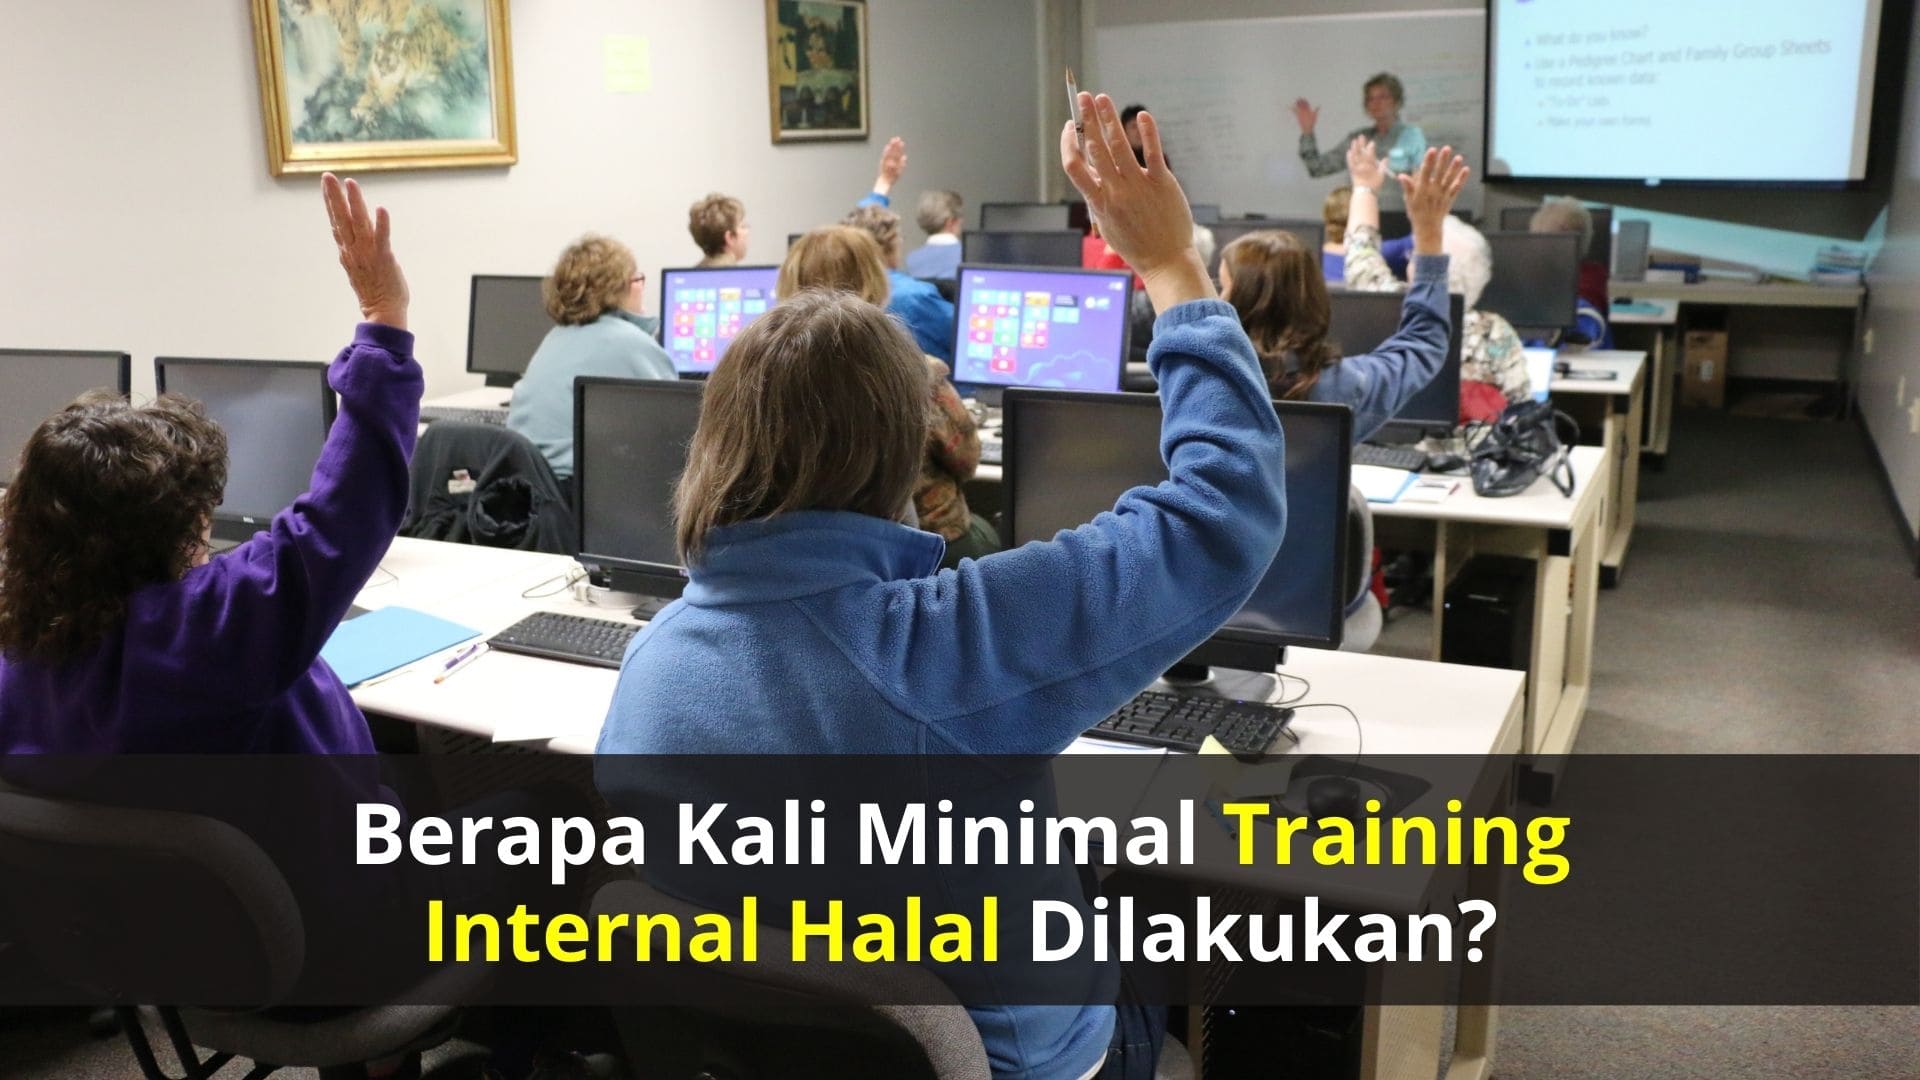 Berapa Kali Minimal Training Internal Halal Dilakukan?